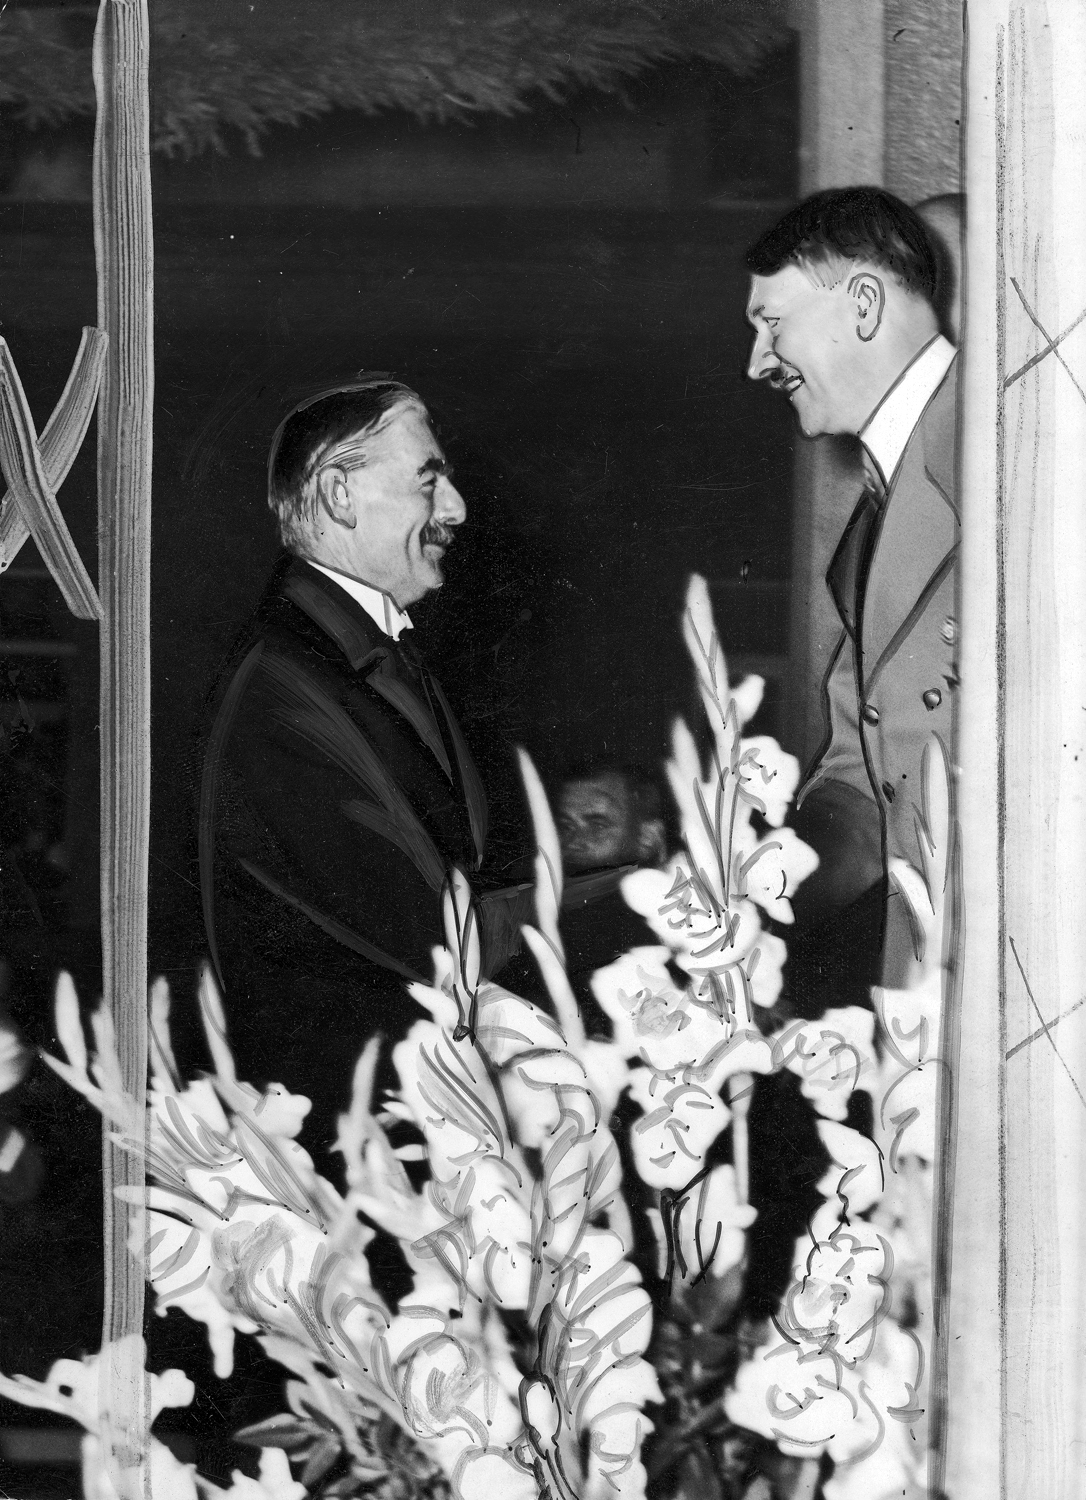 British prime minister Neville Chamberlain and Adolf Hitler shake hands during Chamberlain's visit to Germany